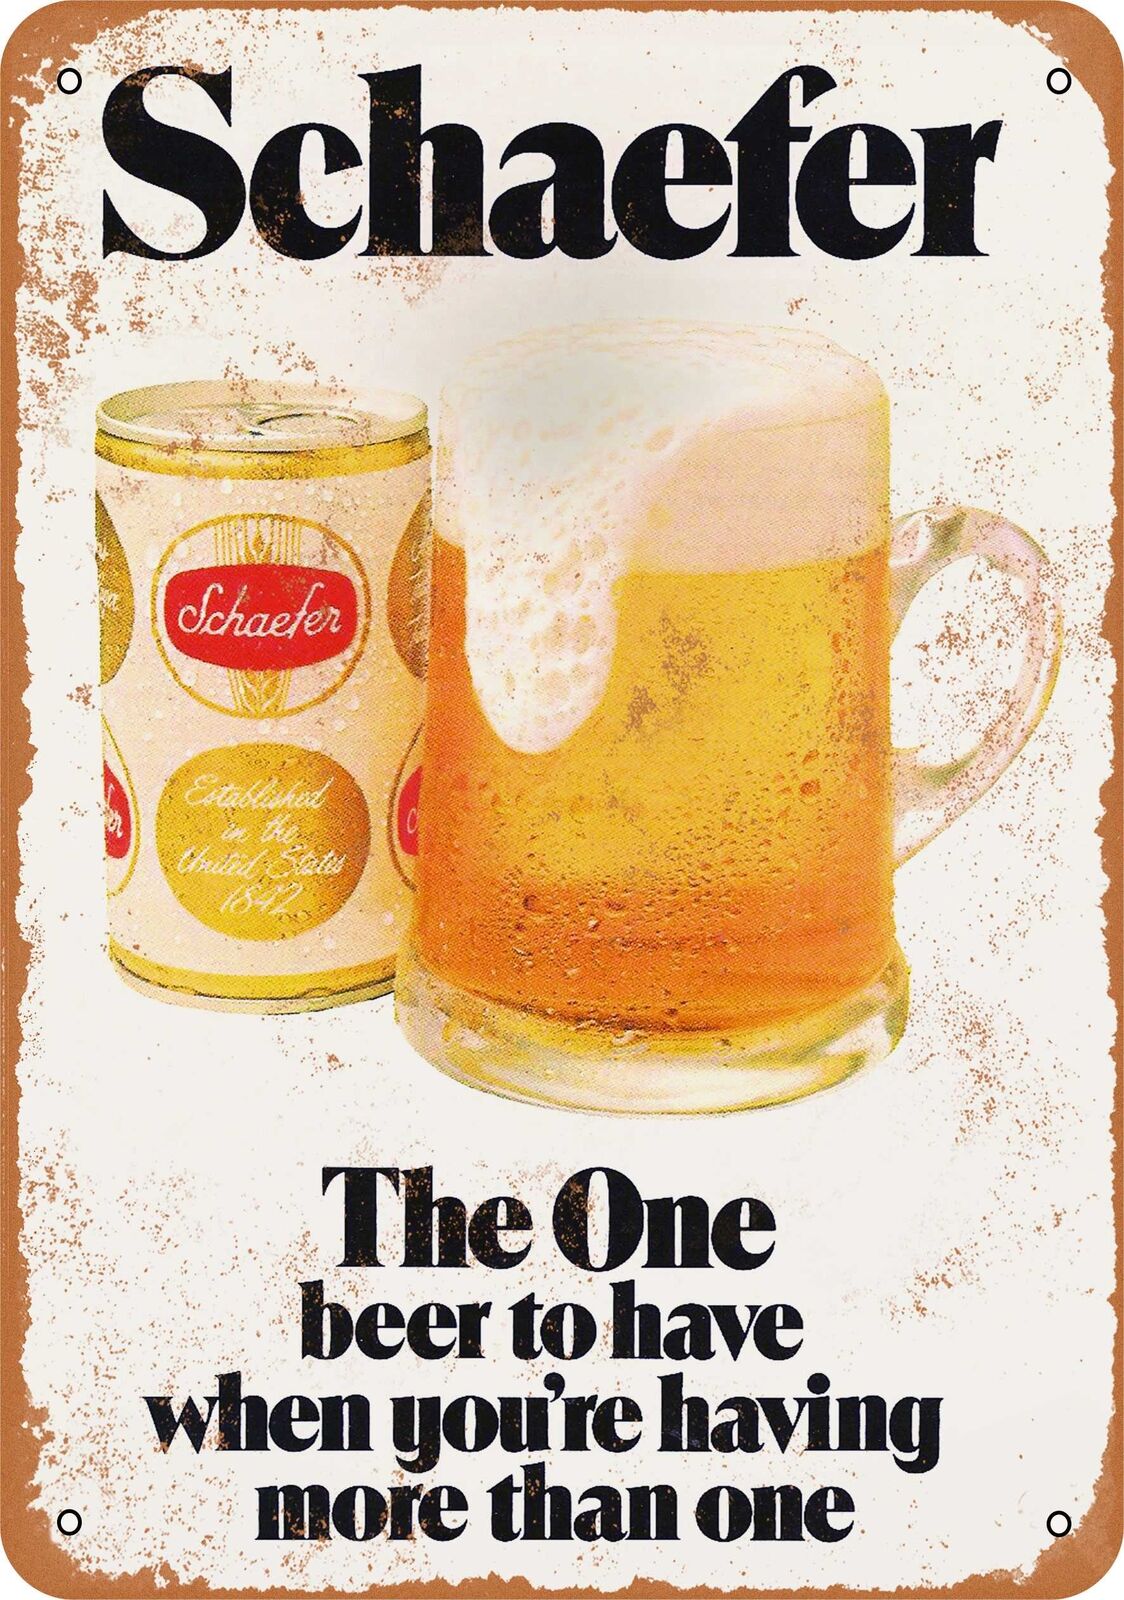 Metal Sign - 1975 Schaefer Beer - Vintage Look Reproduction